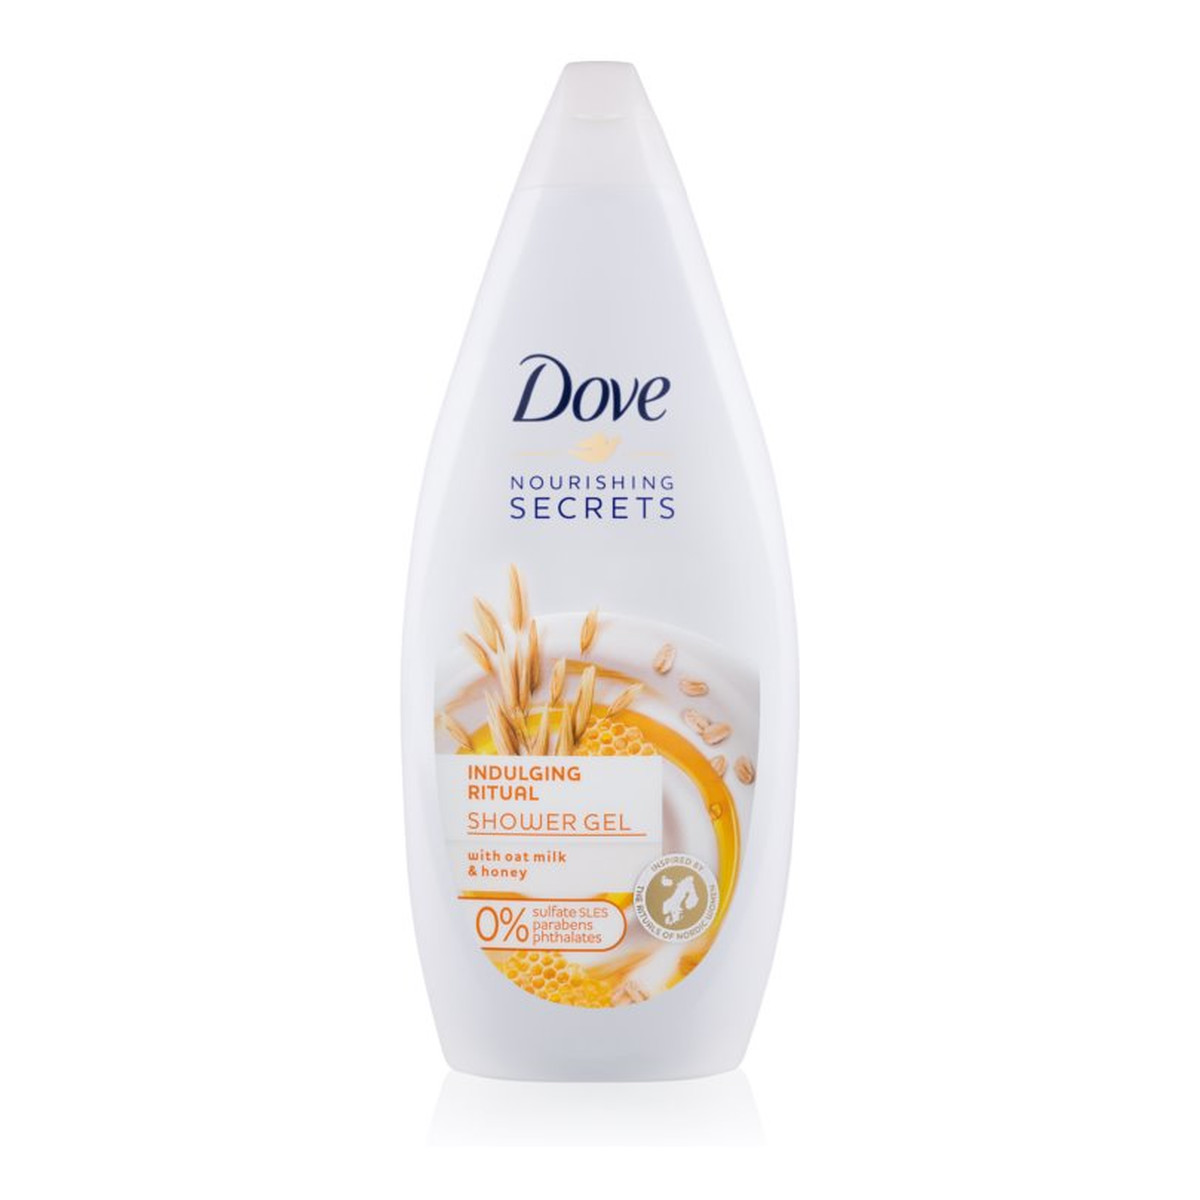 Dove Nourishing Secrets Indulging Ritual kremowy żel pod prysznic Oat Milk & Honey 250ml